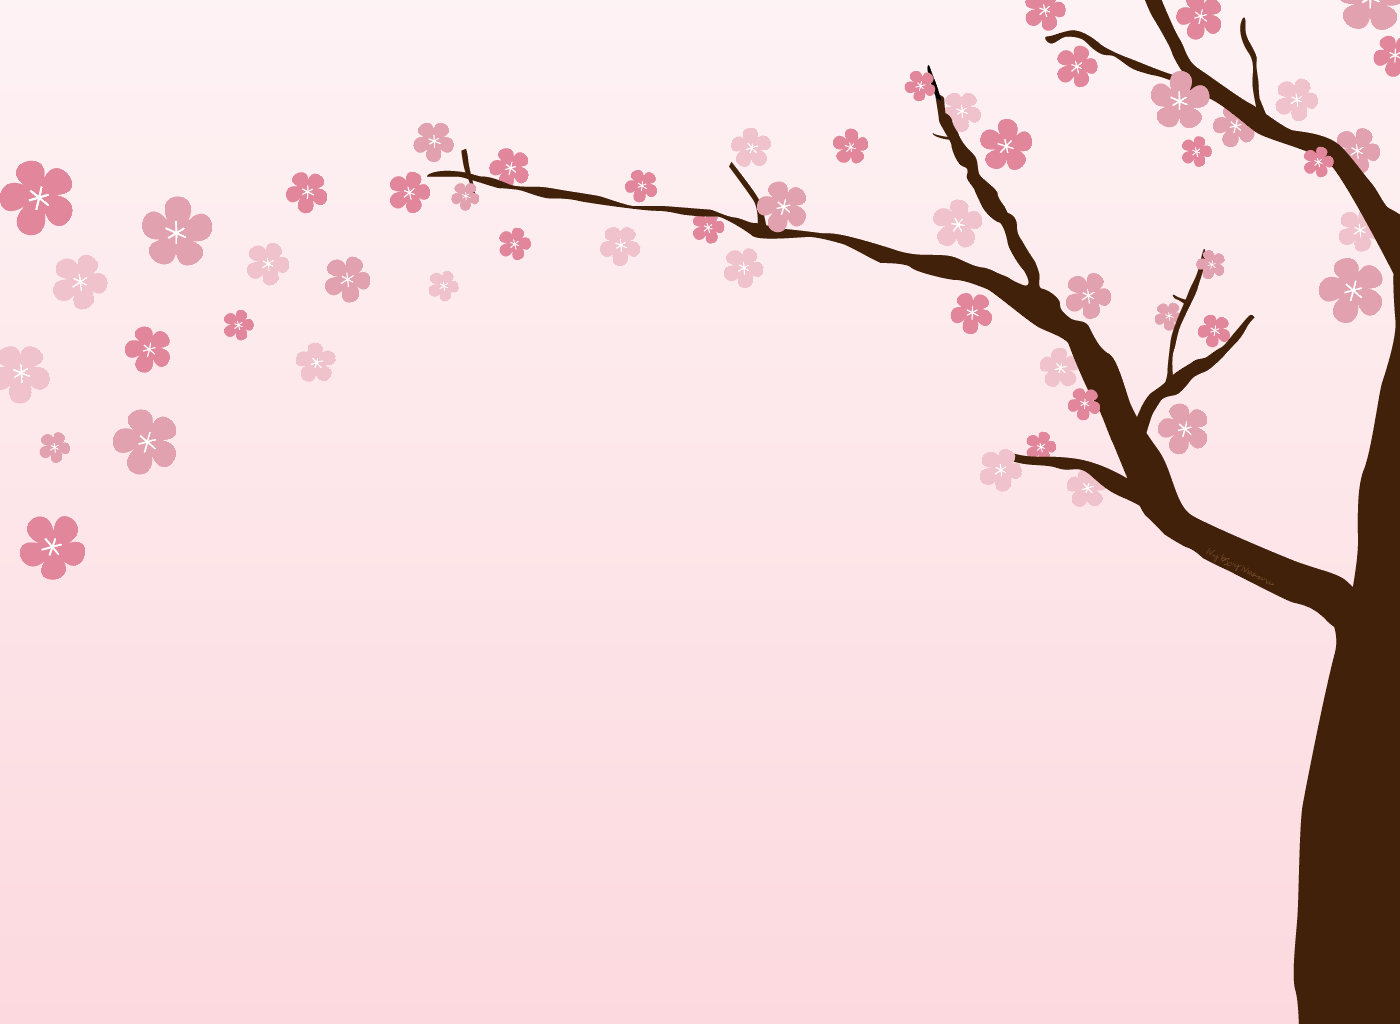 Share more than 77 cherry blossom wallpaper border